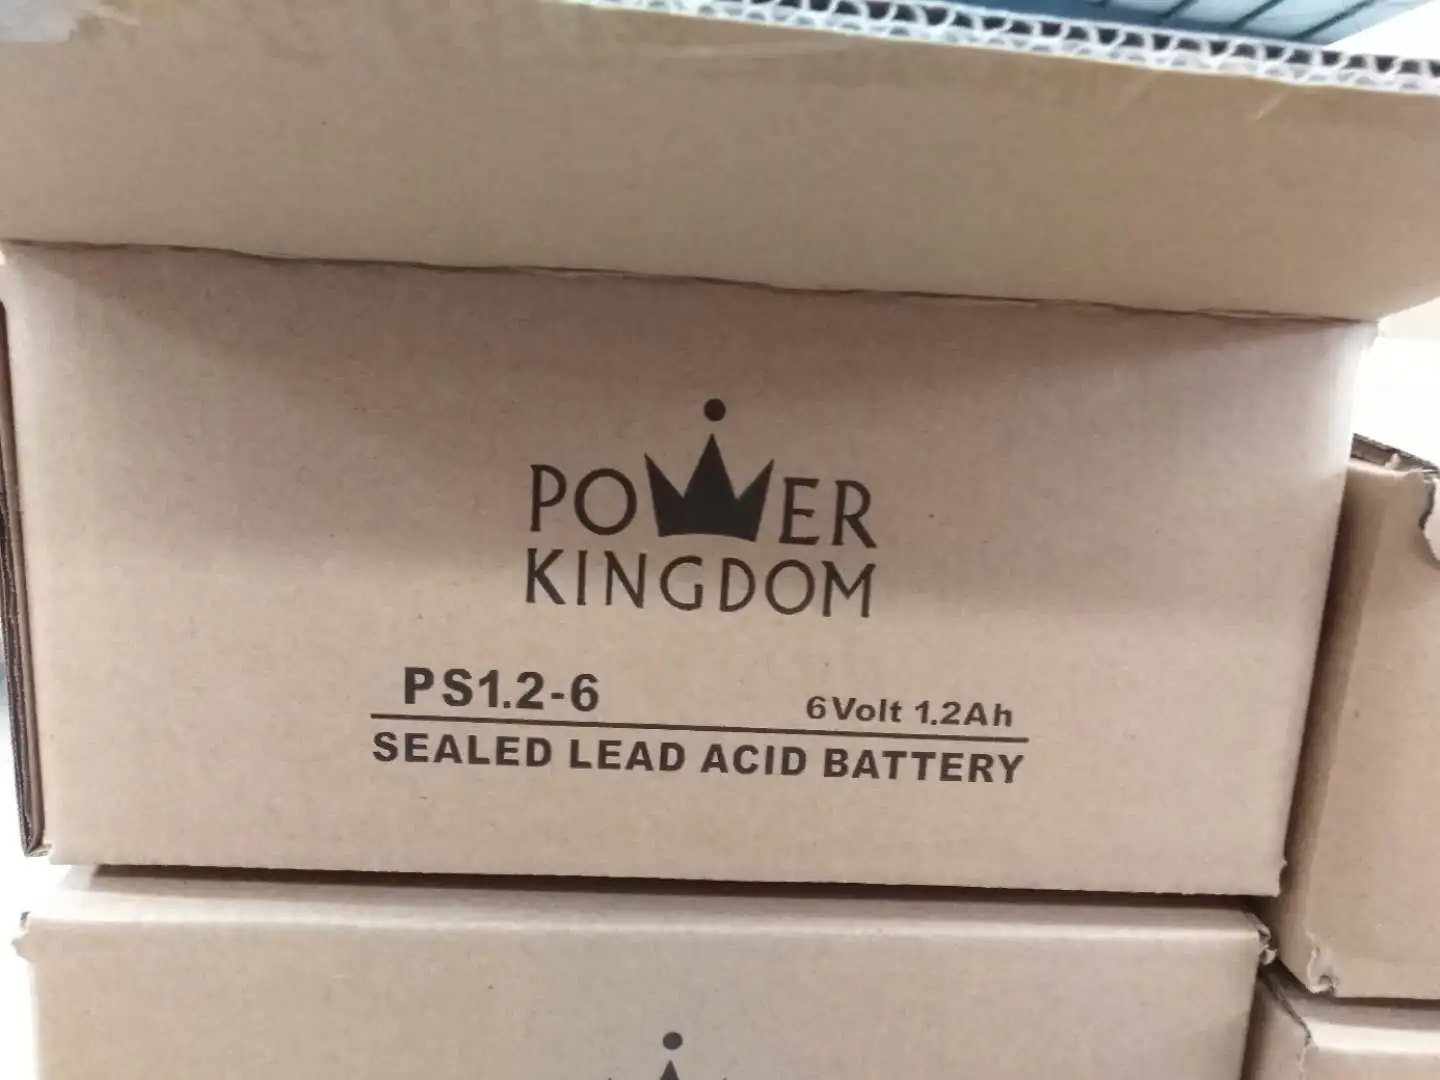 12v 250ah sealed lead acid solar UPS batteries rechargeable deep cycle gel agm battery 12v 250ah